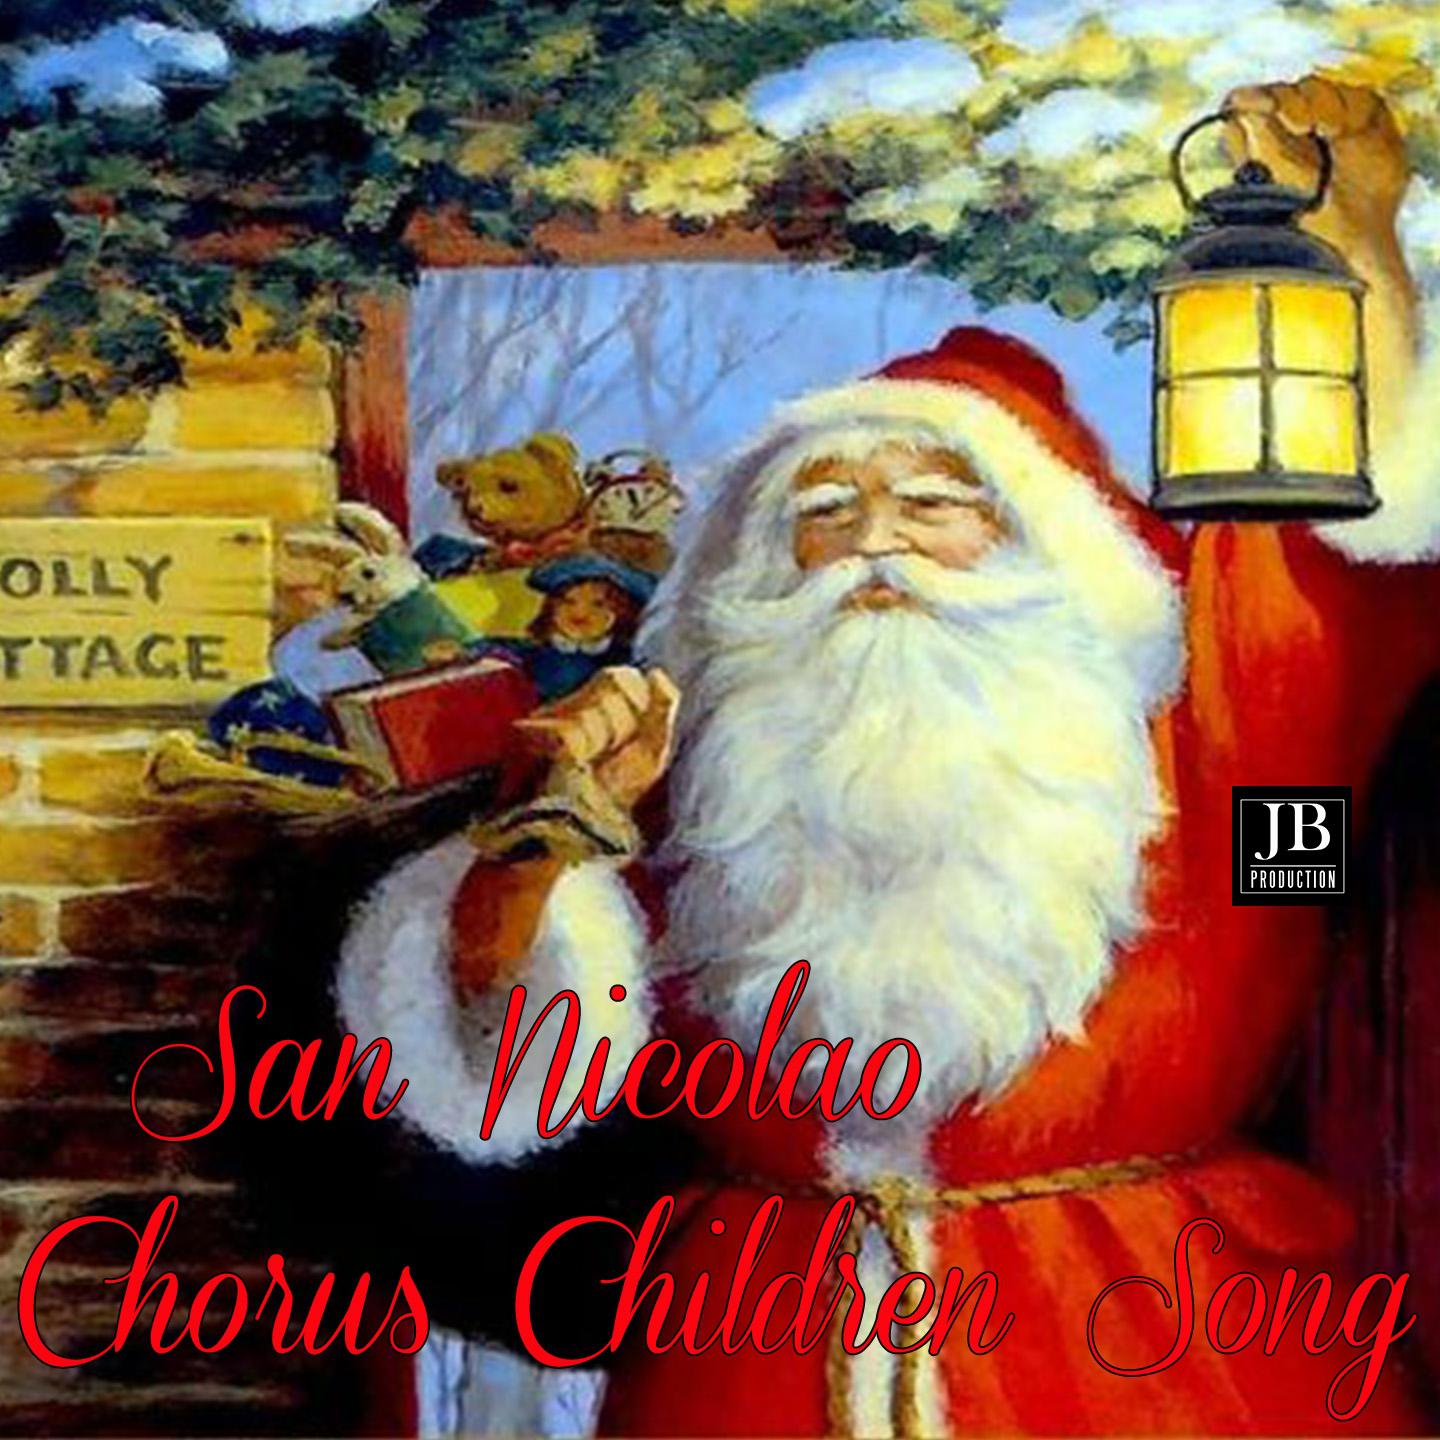 San Nicolao Chorus Children Song